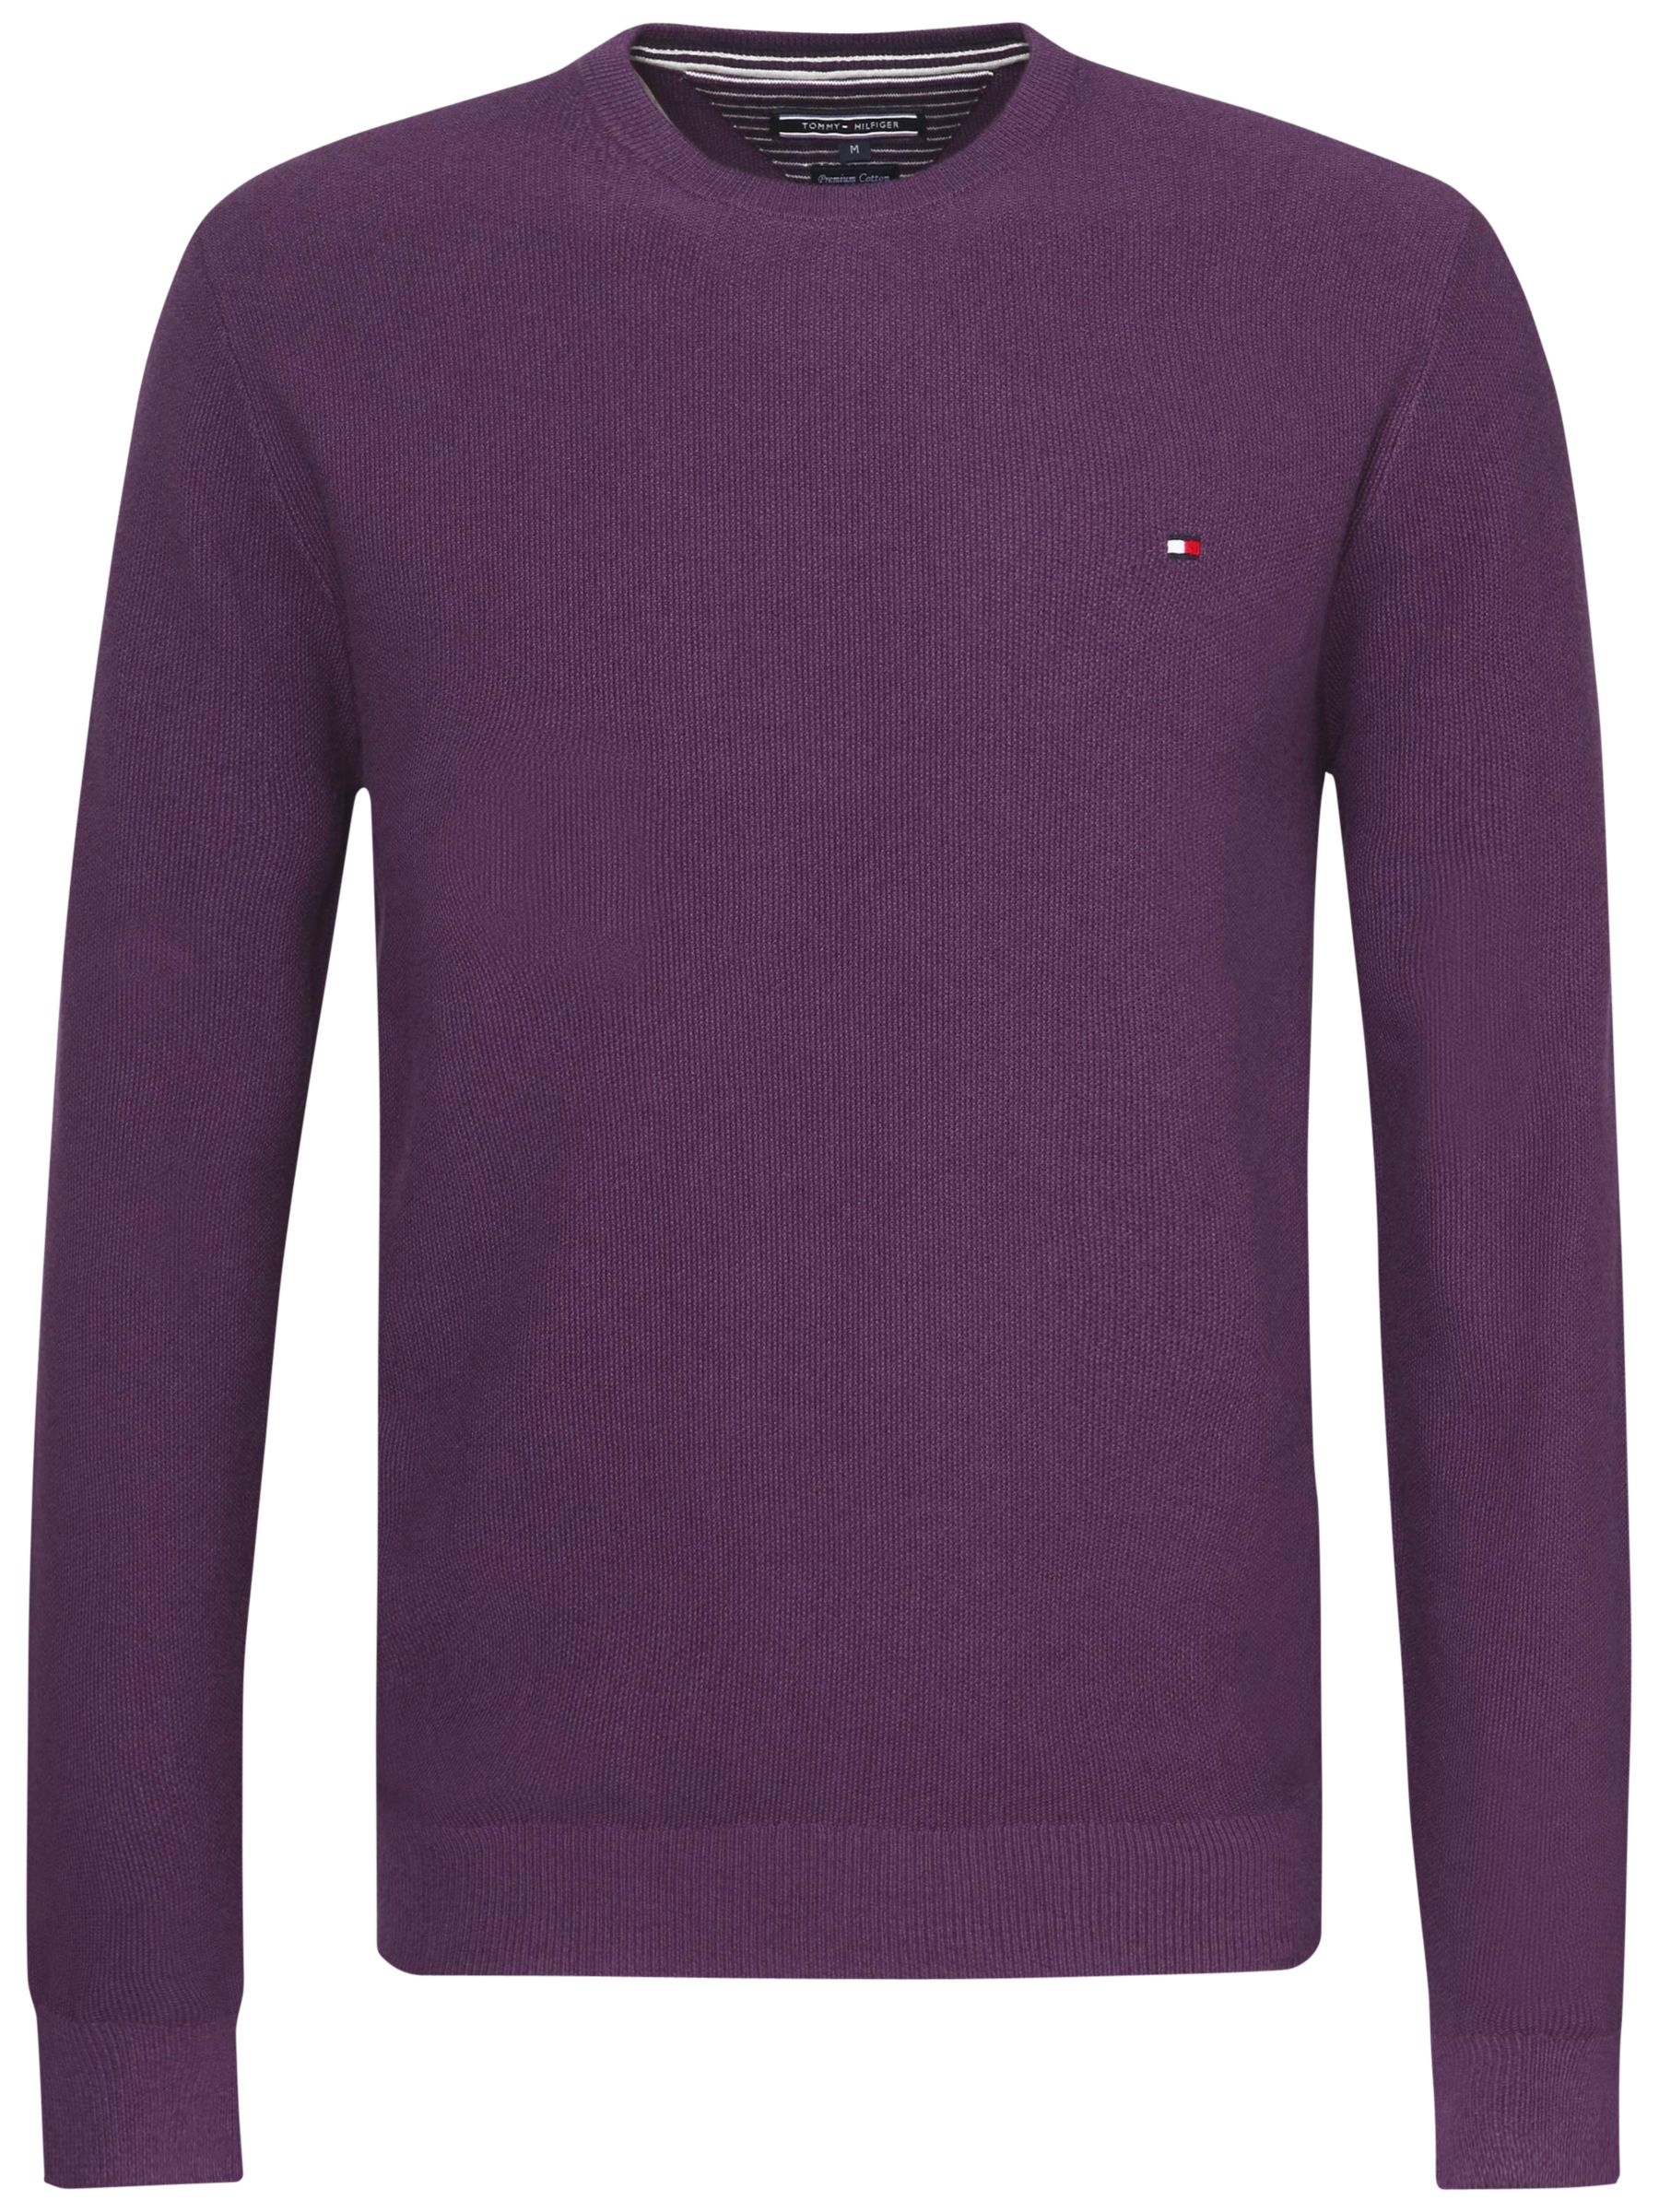 tommy hilfiger purple jumper